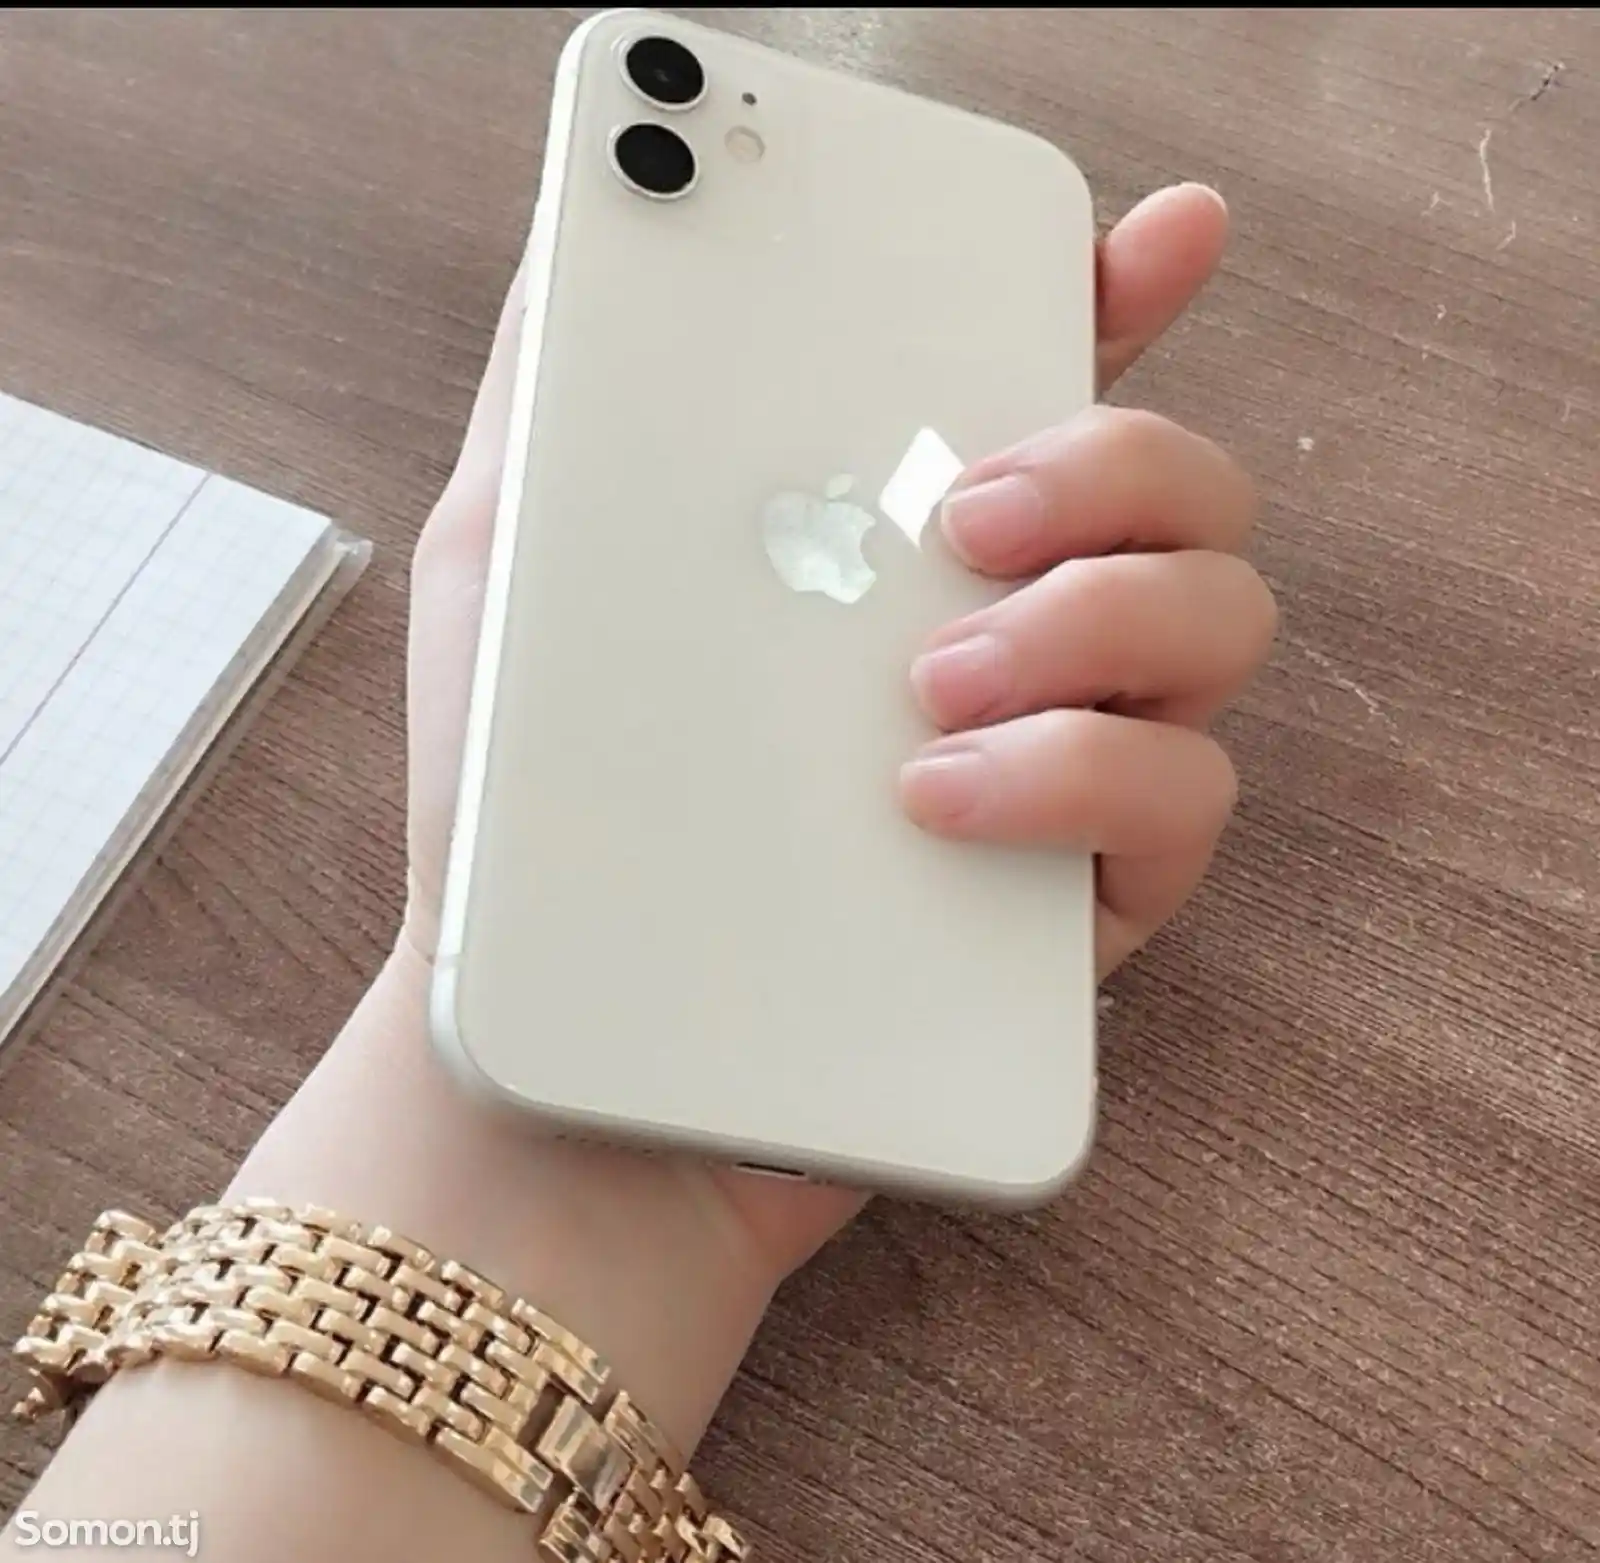 Apple iPhone 11, 64 gb, White